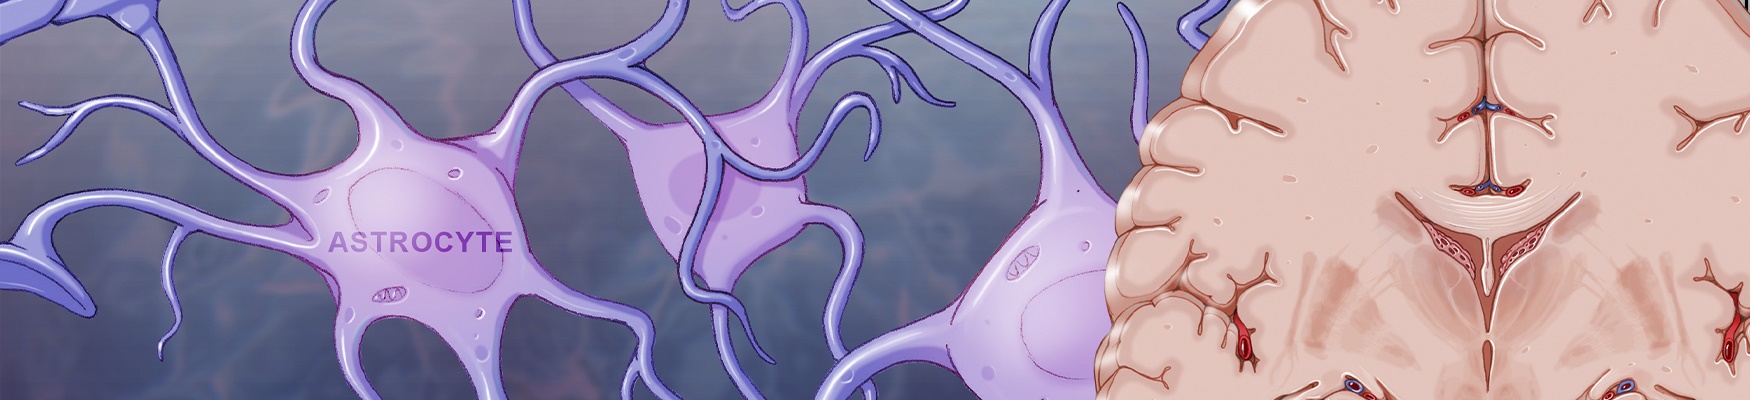 Astrocyte image promo